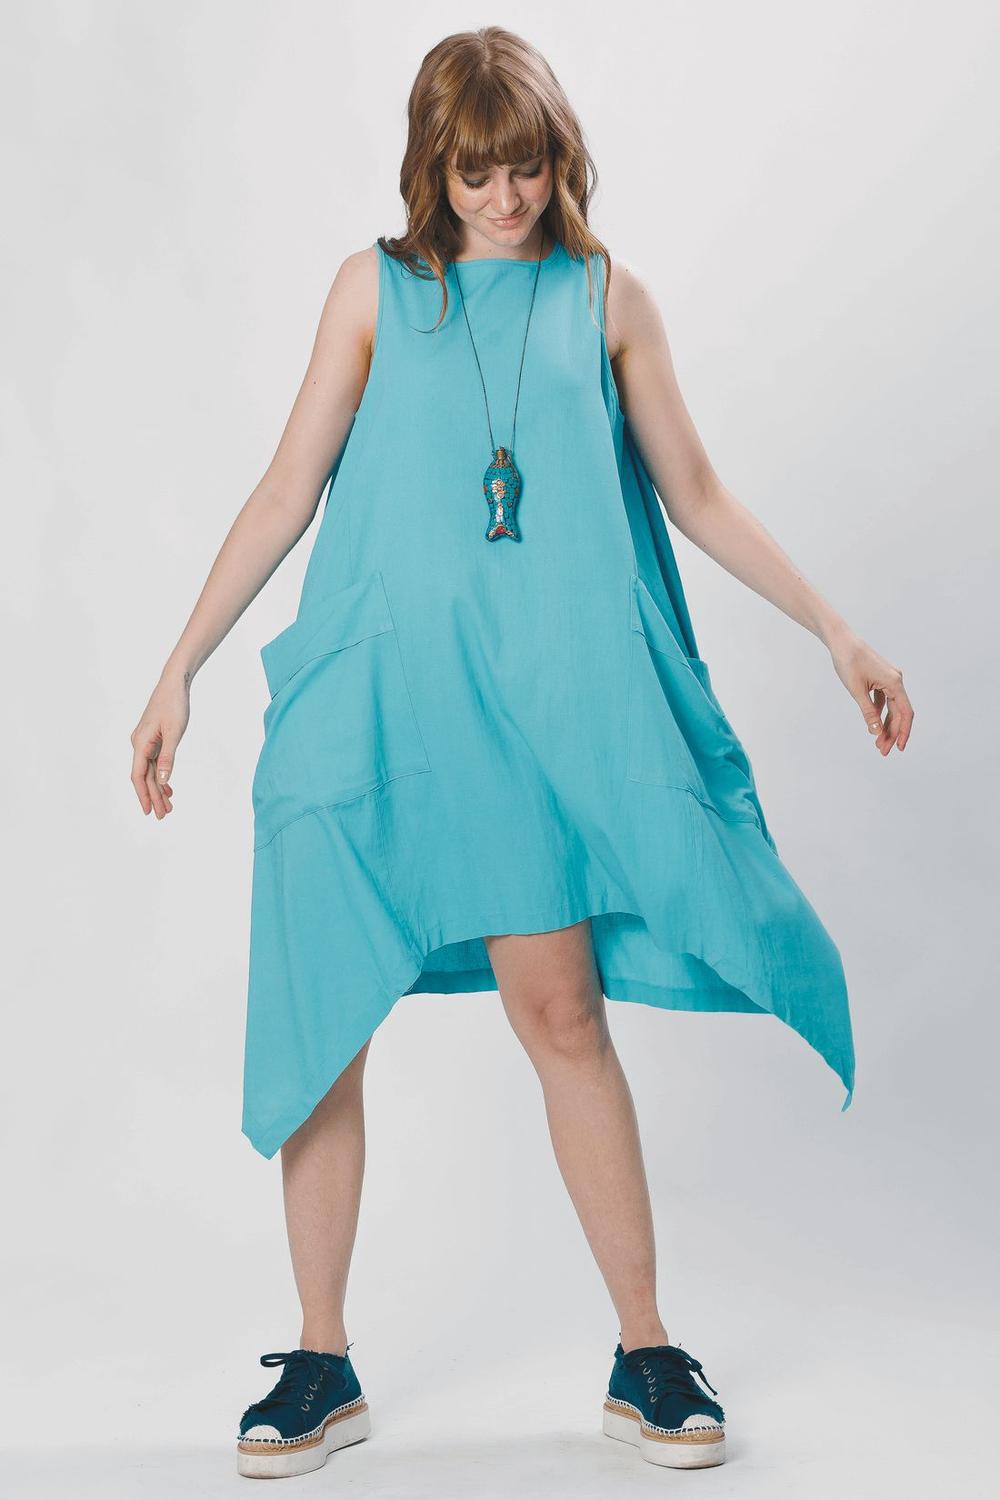 vestido azul turquesa curto